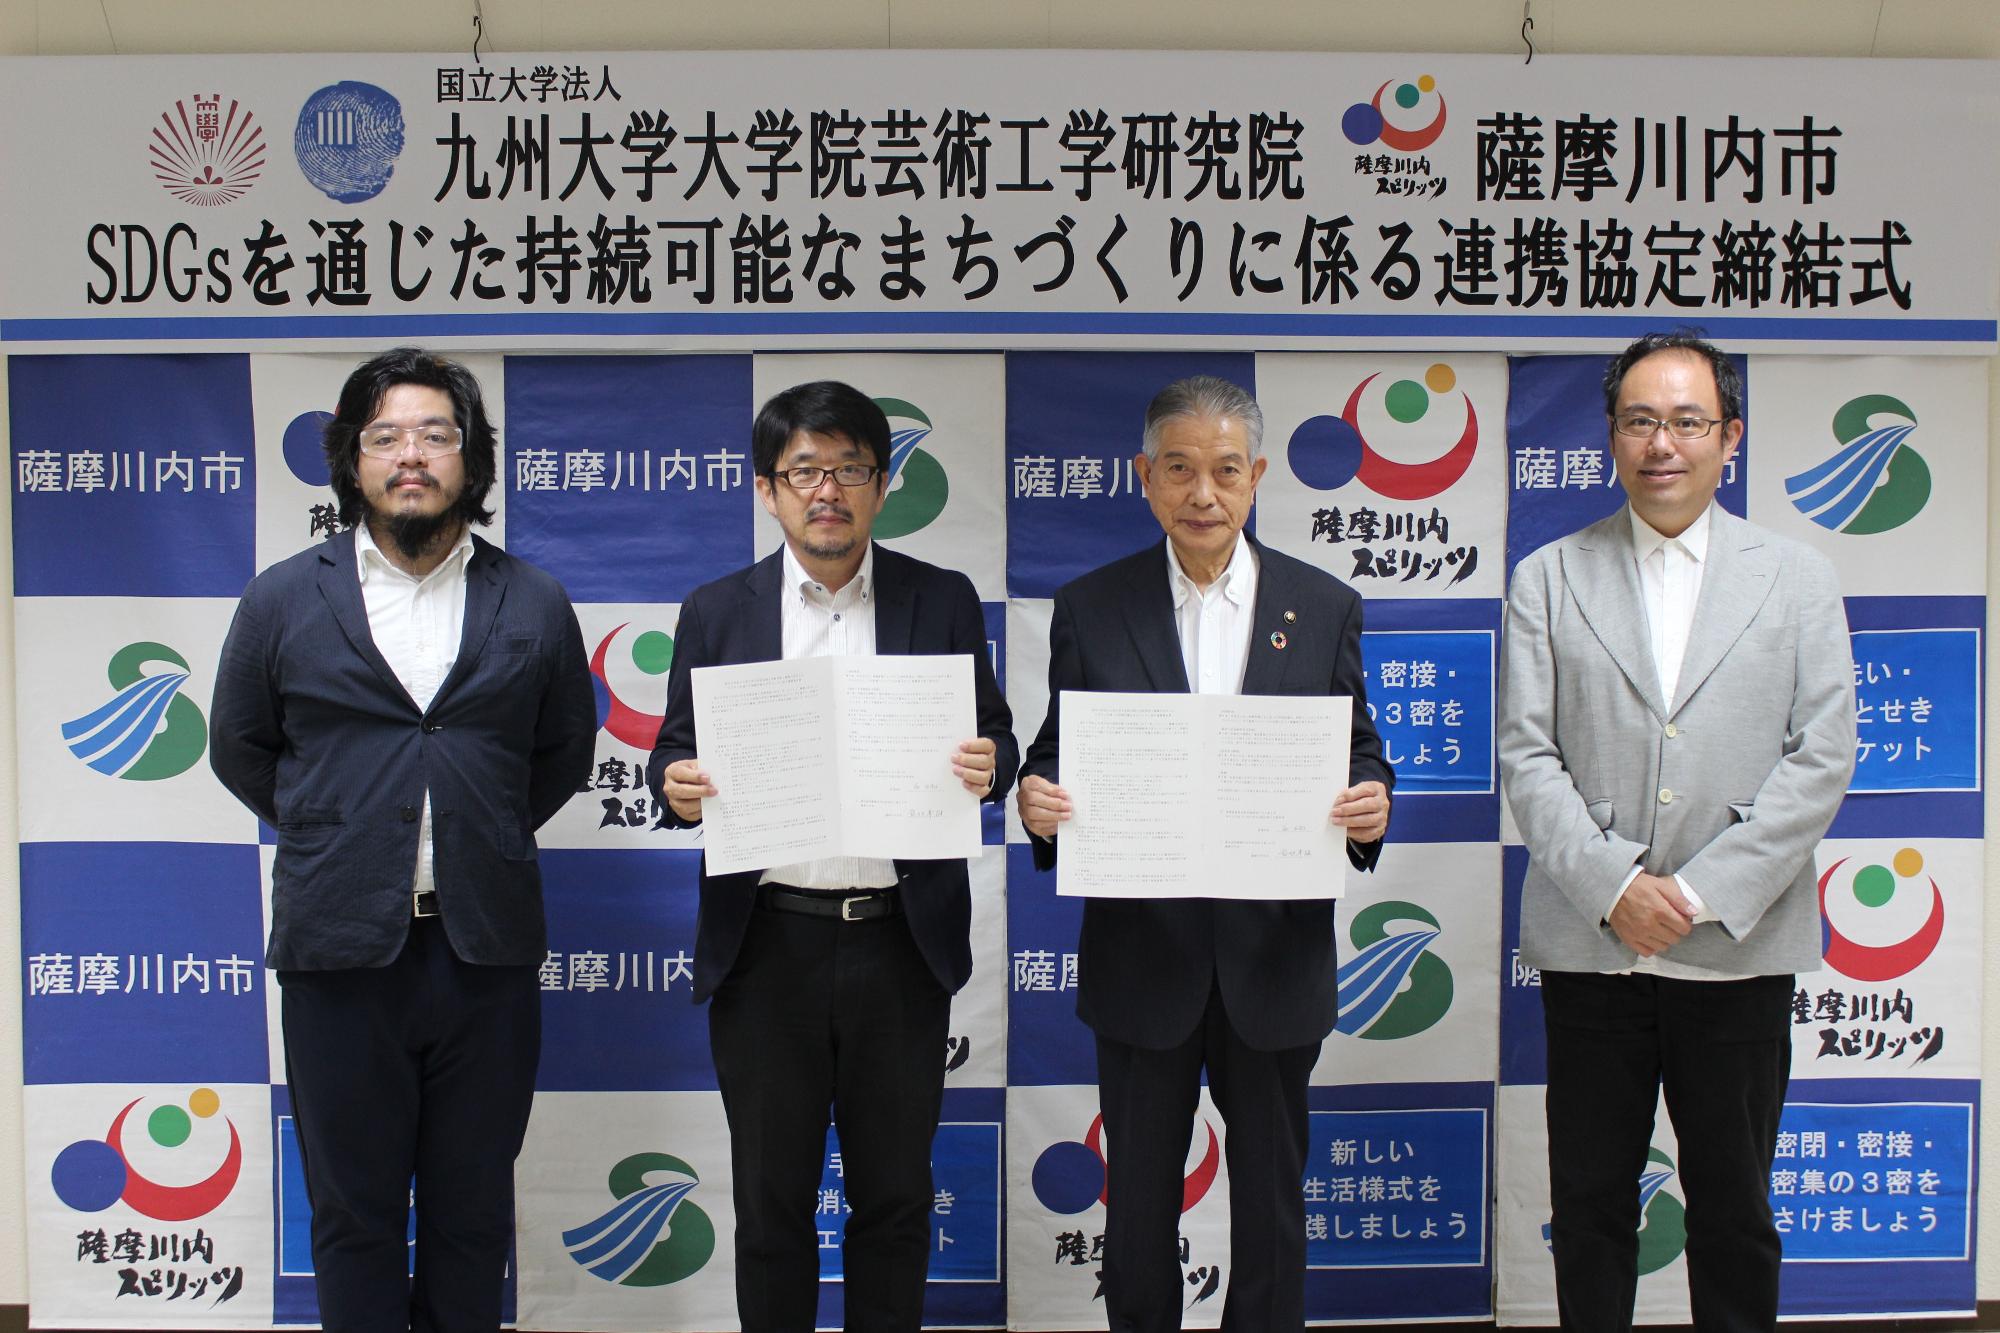 「SDGsを通じた持続可能なまちづくりに係る連携協定締結式」と書かれた横断幕の下で、書類を掲げるスーツ姿の4人の男性たちの写真